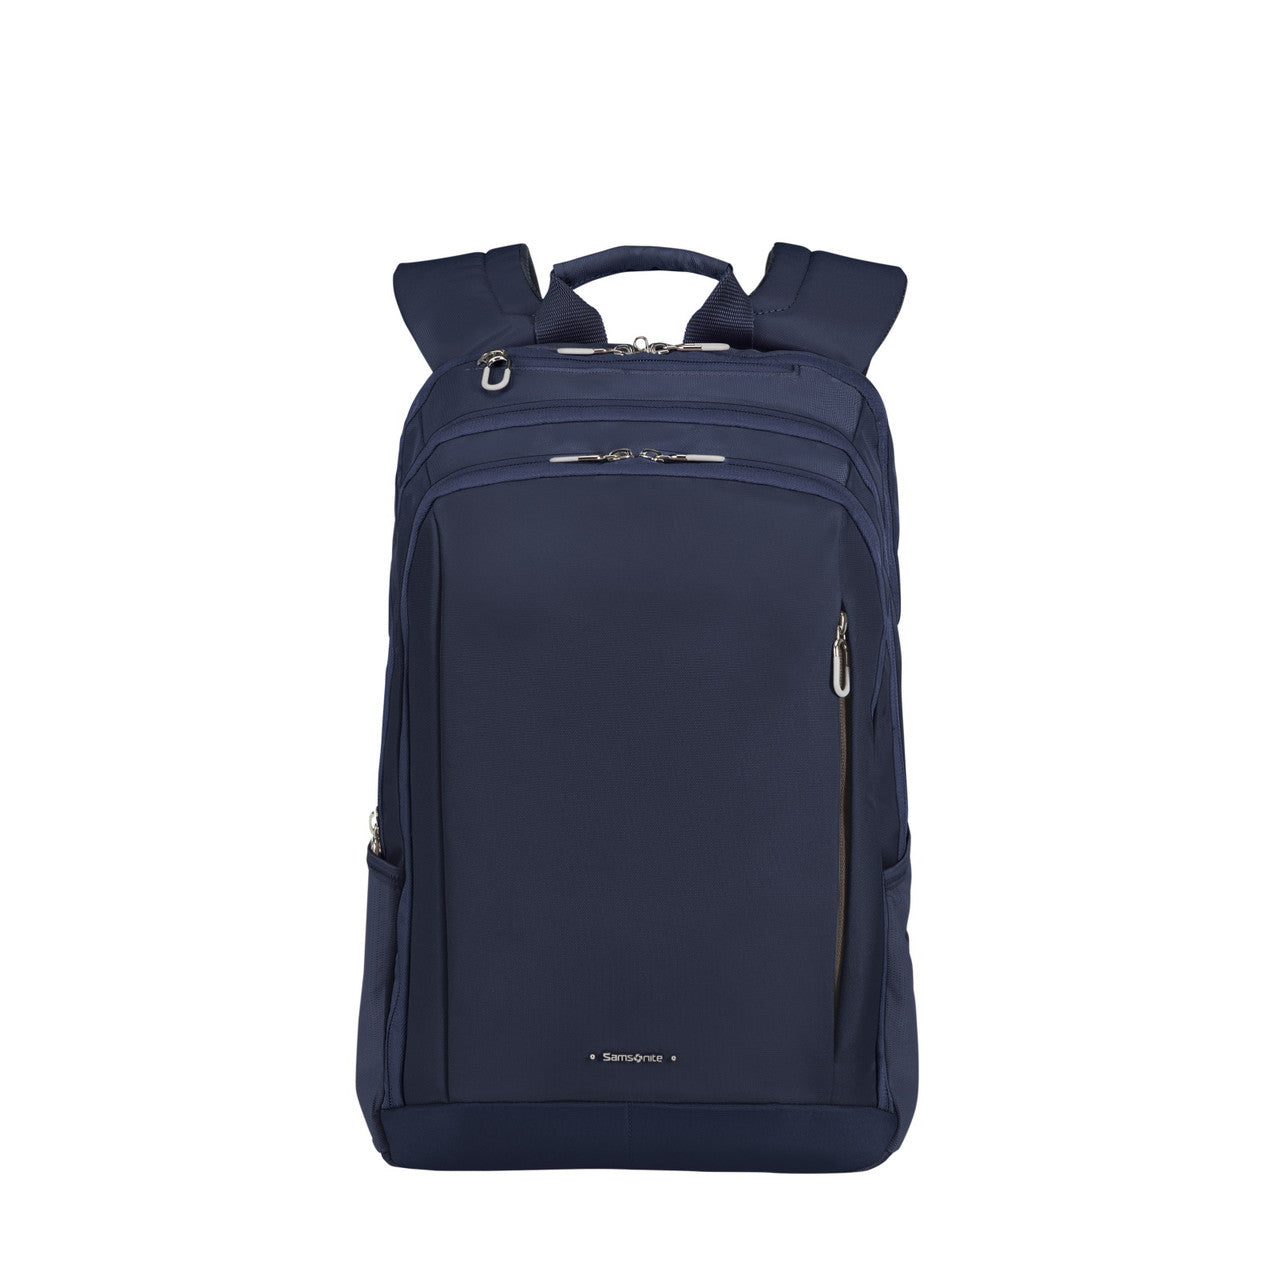 Samsonite - GUARDIT CLASSY 15.6in Backpack - MIDNIGHT BLUE-1